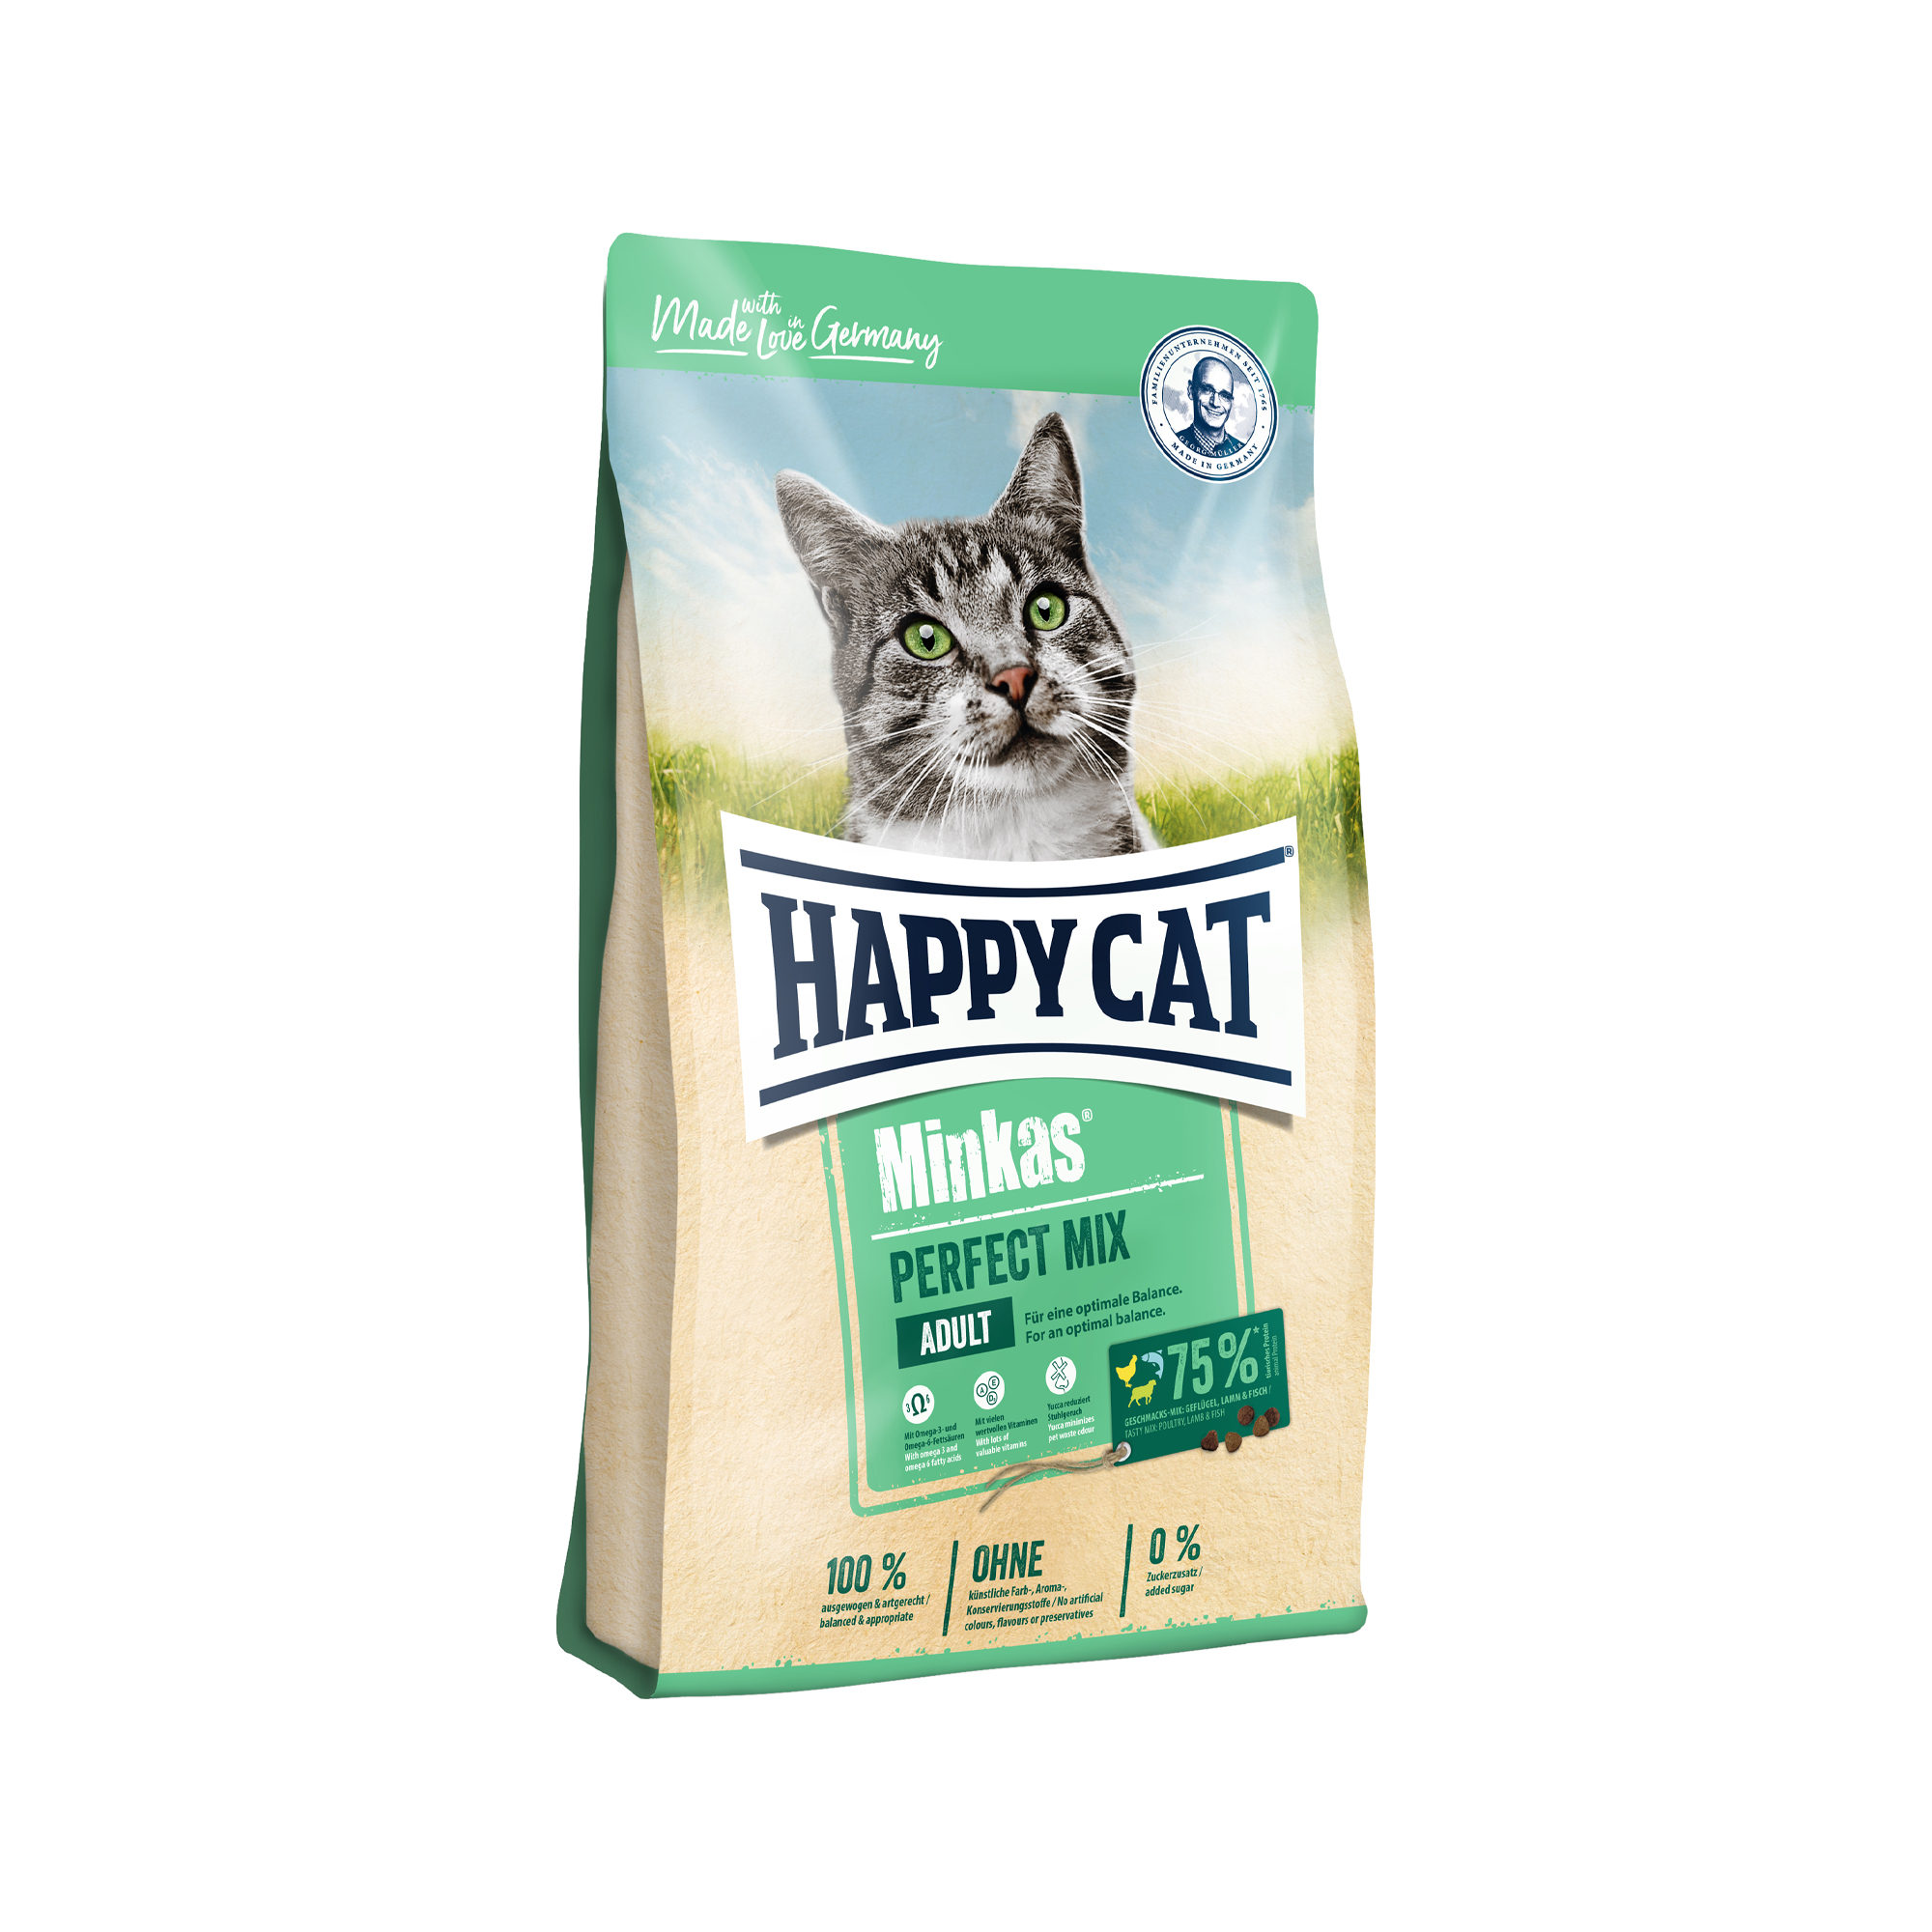 Happy Cat Minkas Perfect Mix Adult Katzenfutter - Geflügel, Lamm & Fisch - 10 kg